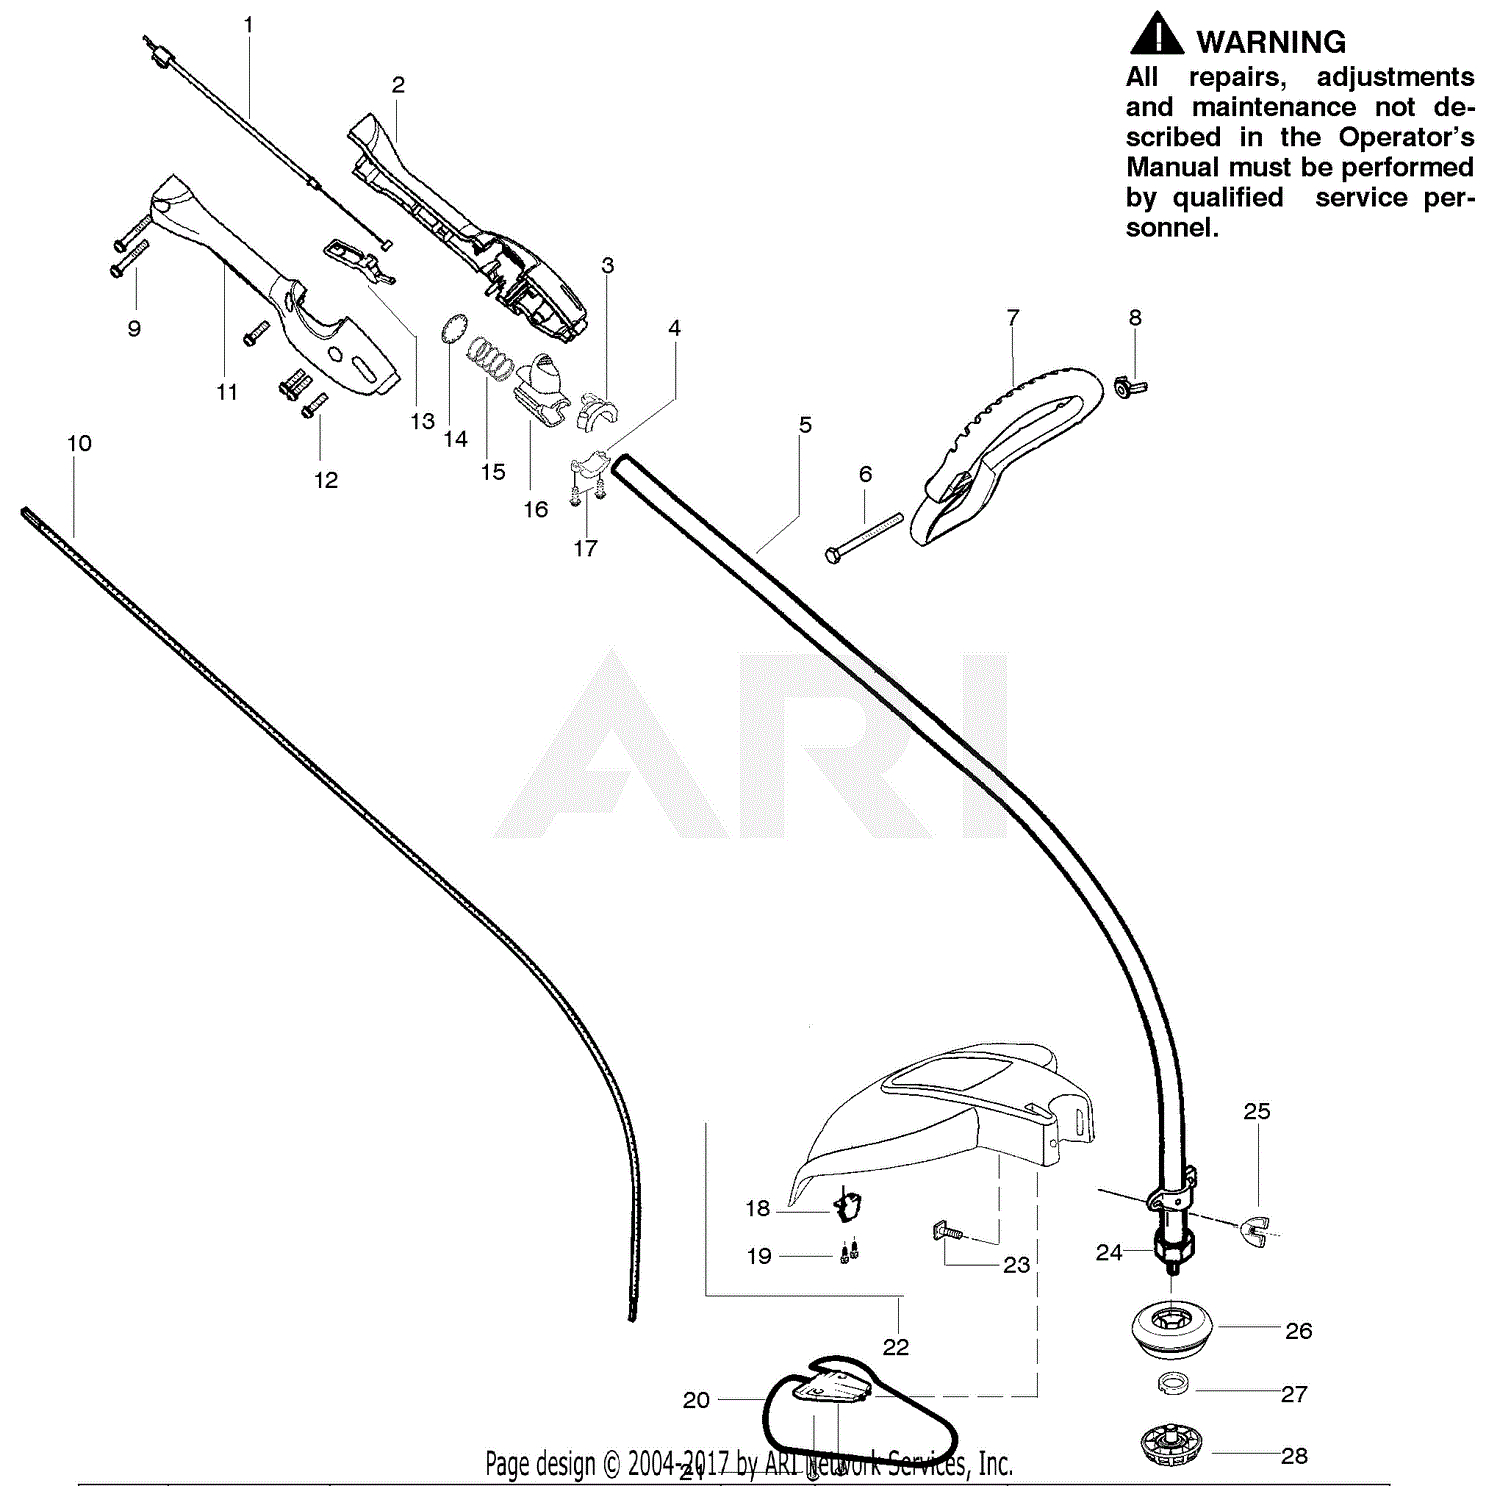 New Holland Skid Steer Parts Diagram How To Wire A Light Fixture Http Wwwaskmehelpdeskcom Electrical